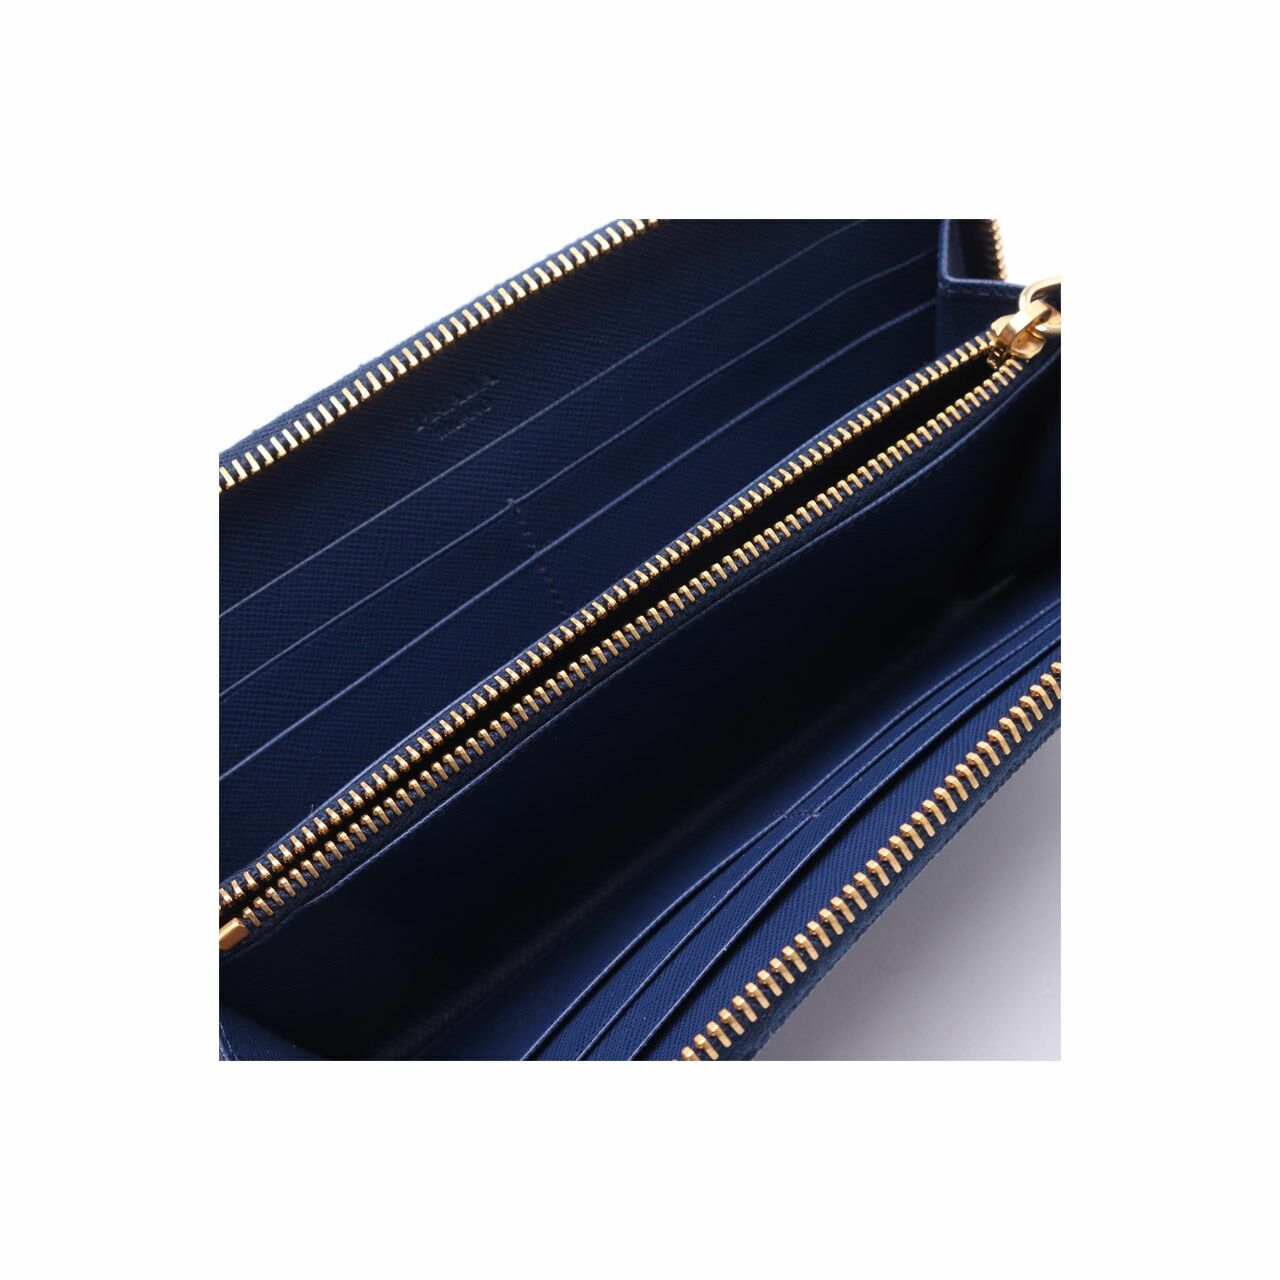 Prada Bluette Saffiano Metal Leather Zip Wallet